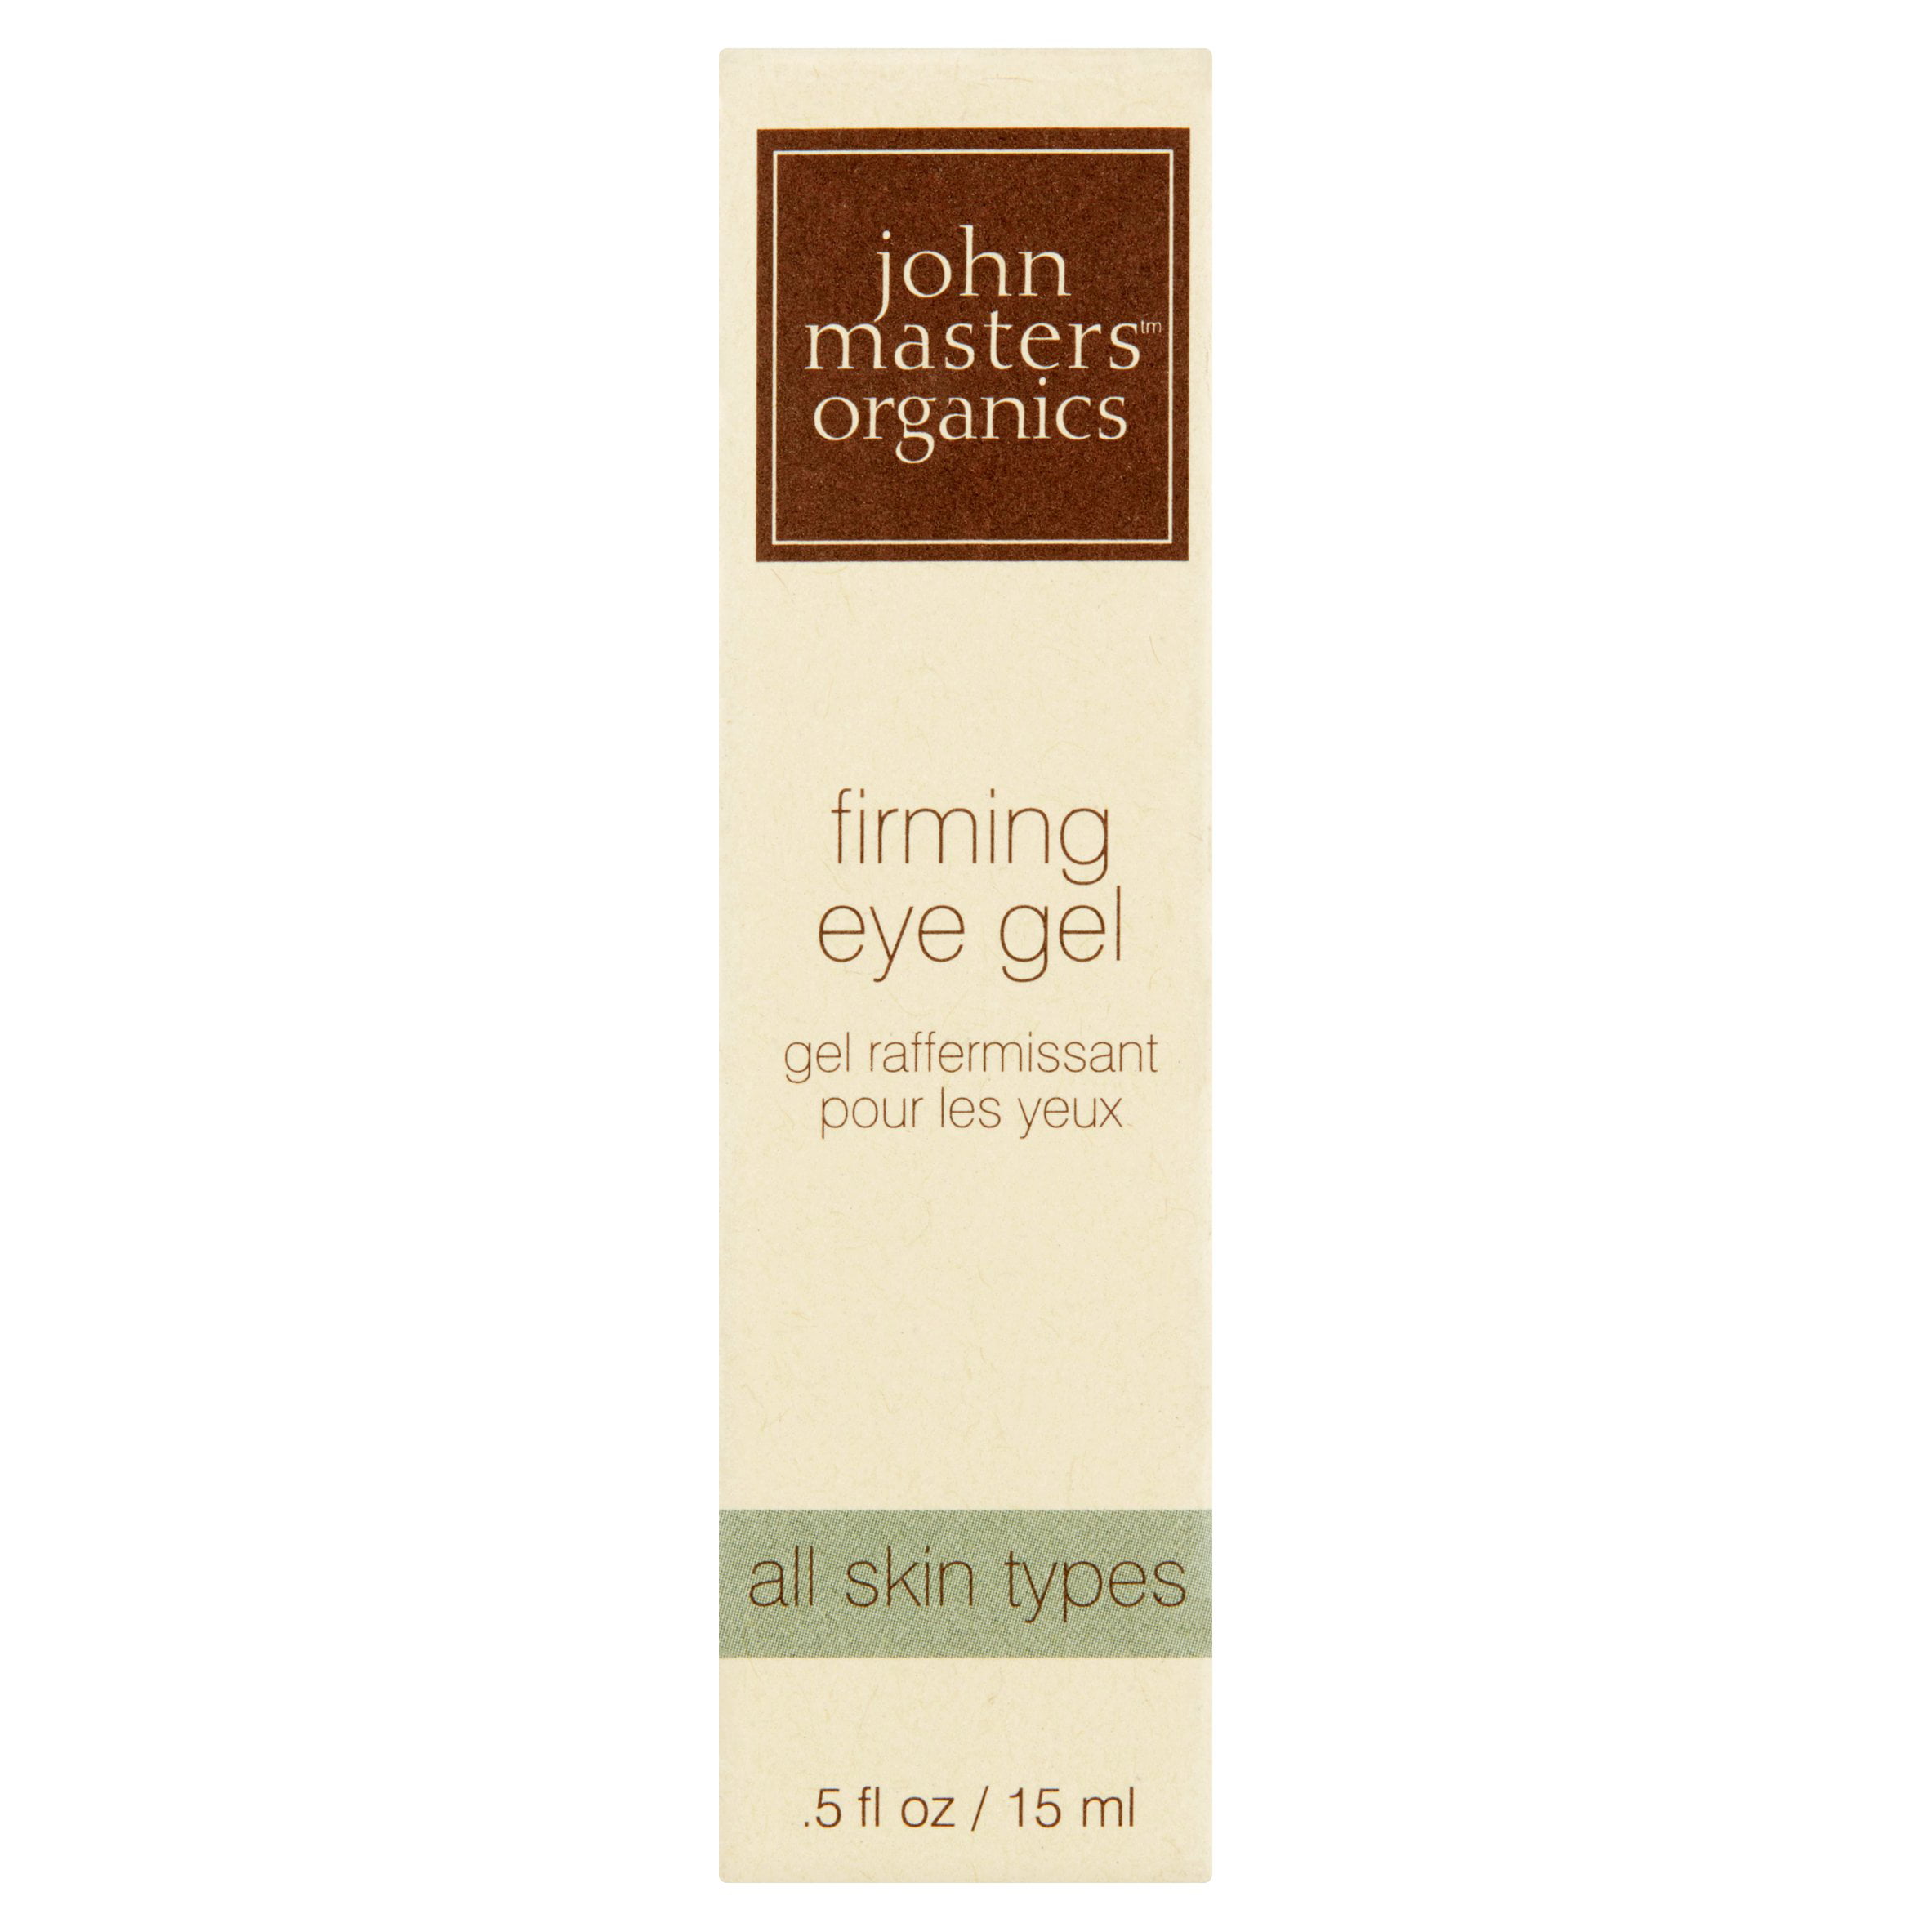 rit aantrekkelijk Hardheid John Masters Organics Firming Eye Gel, .5 fl oz - Walmart.com